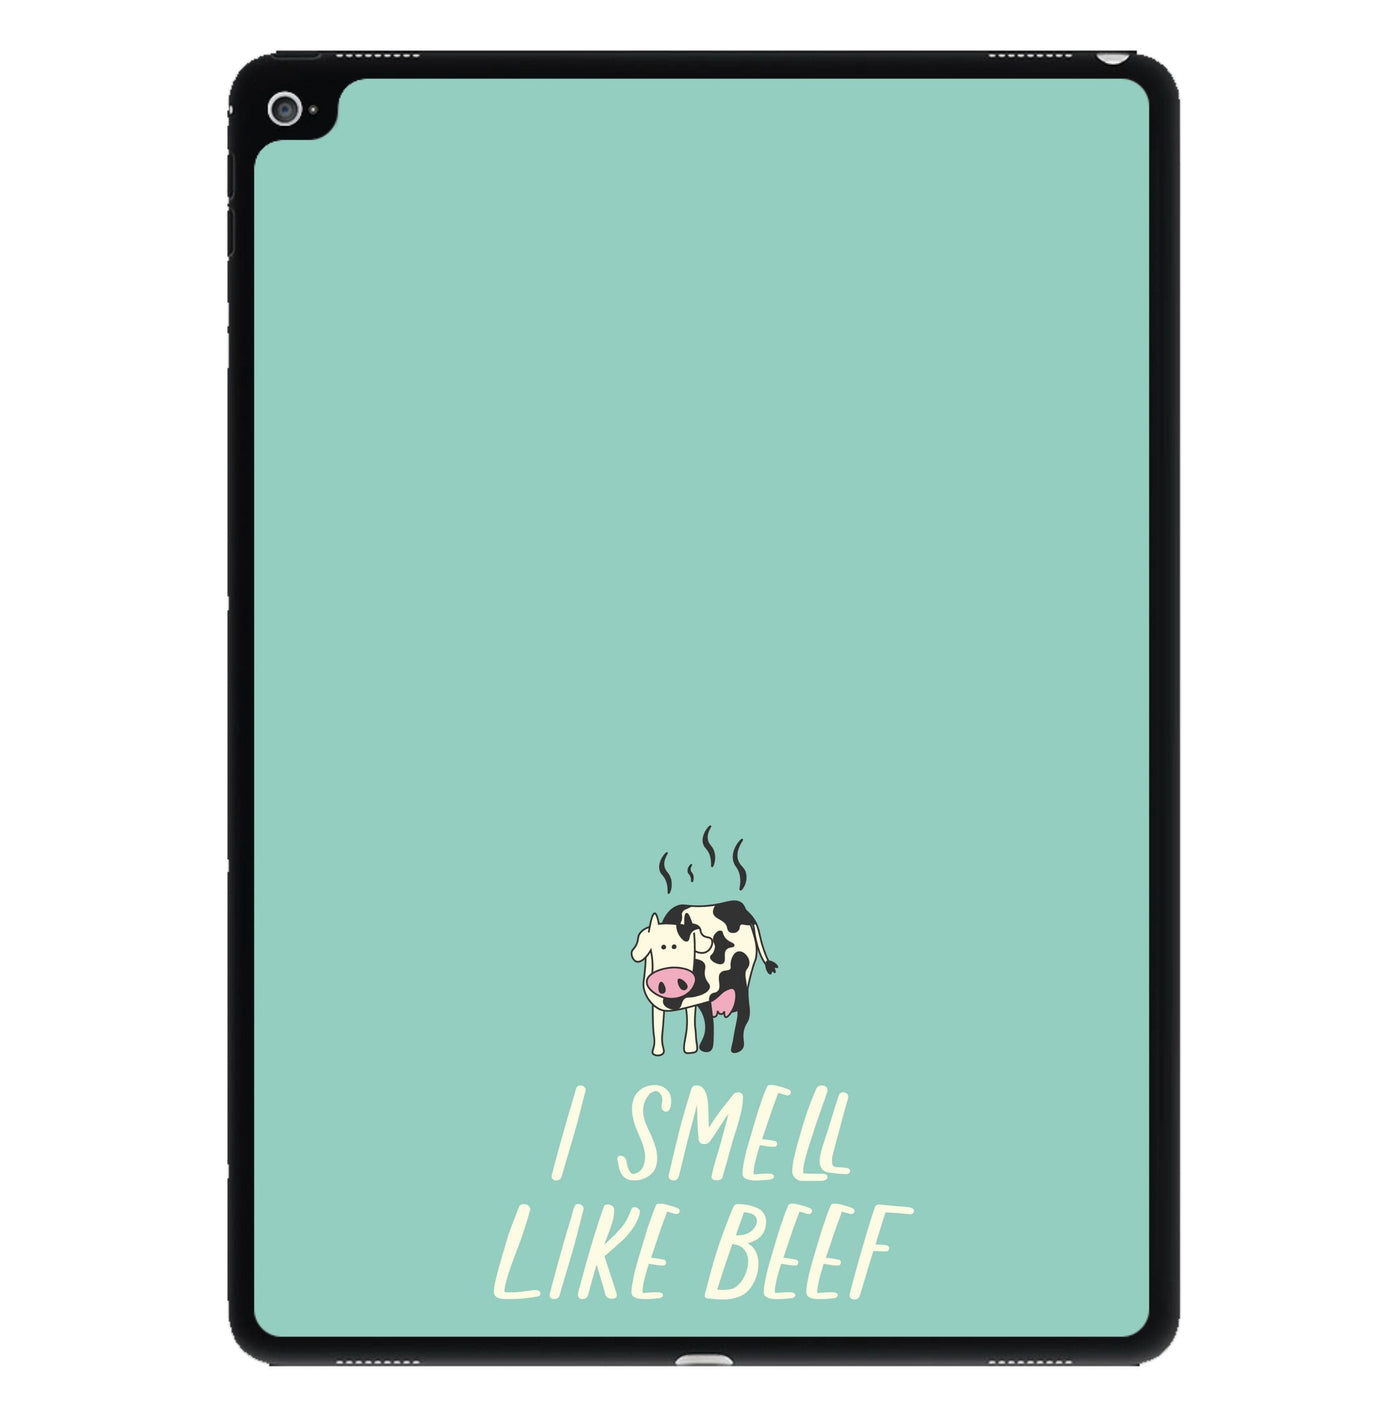 I Smell Like Beef - Memes iPad Case